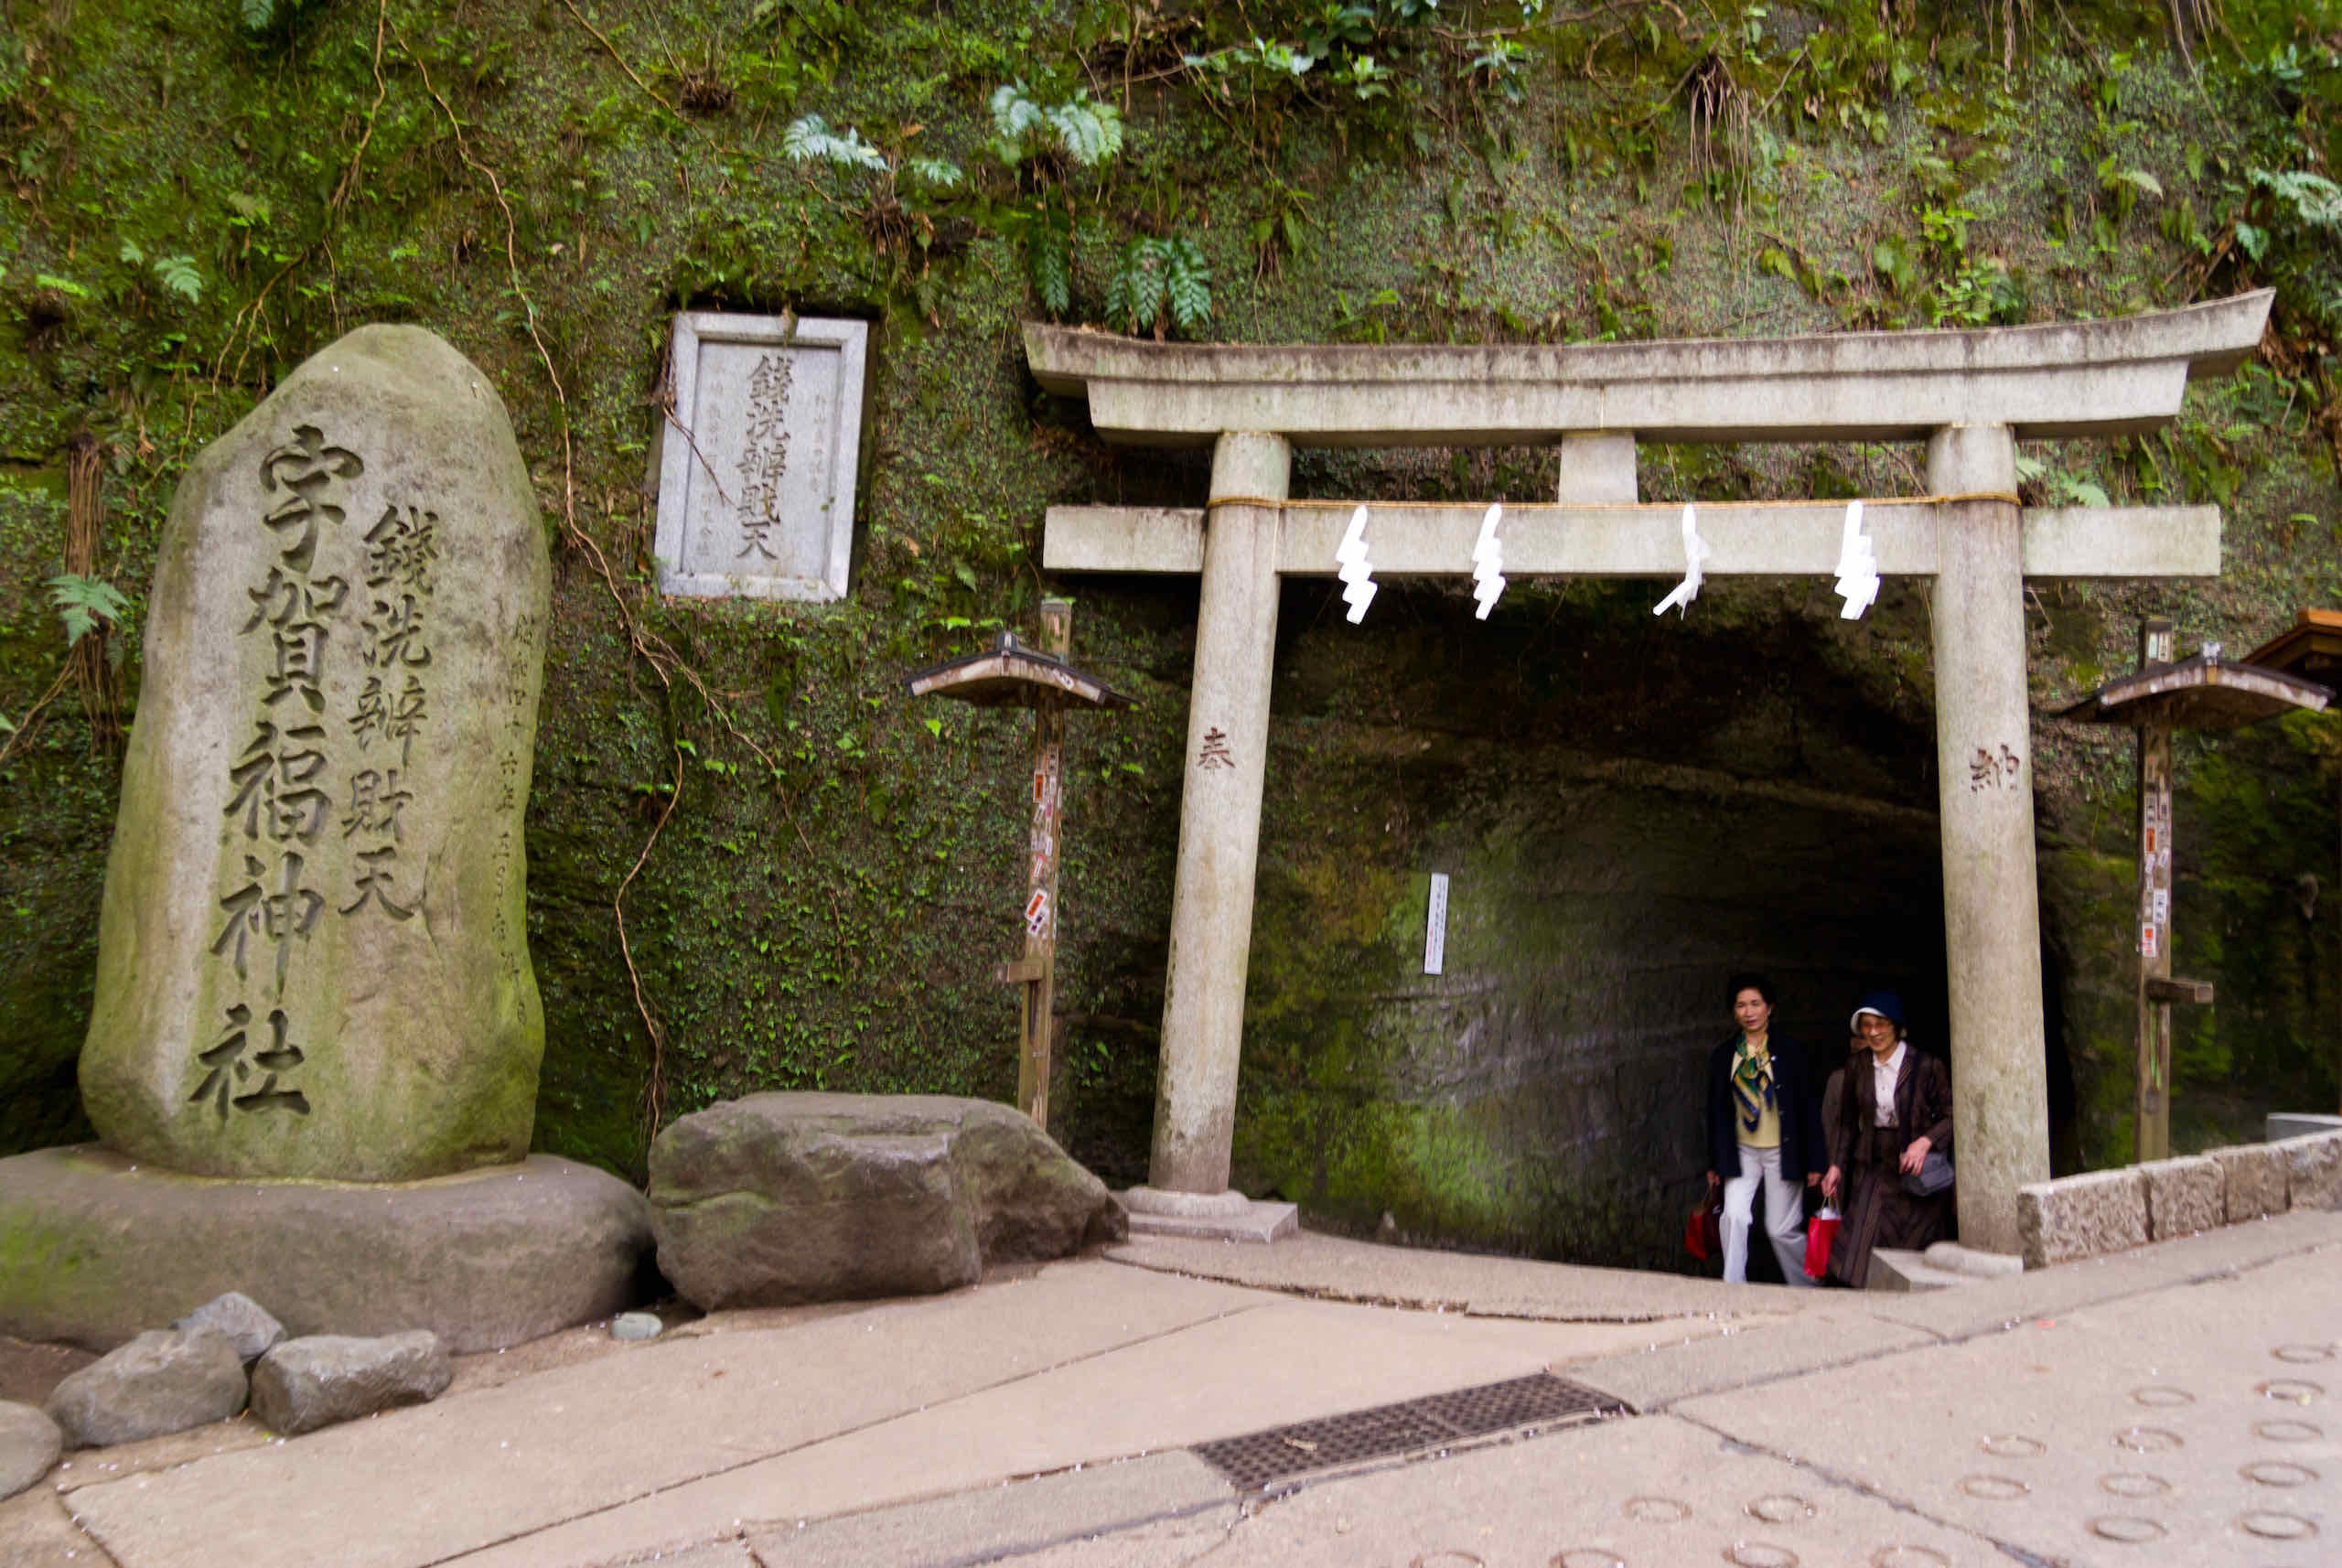 entrance to zeniarai benzaiten shrine